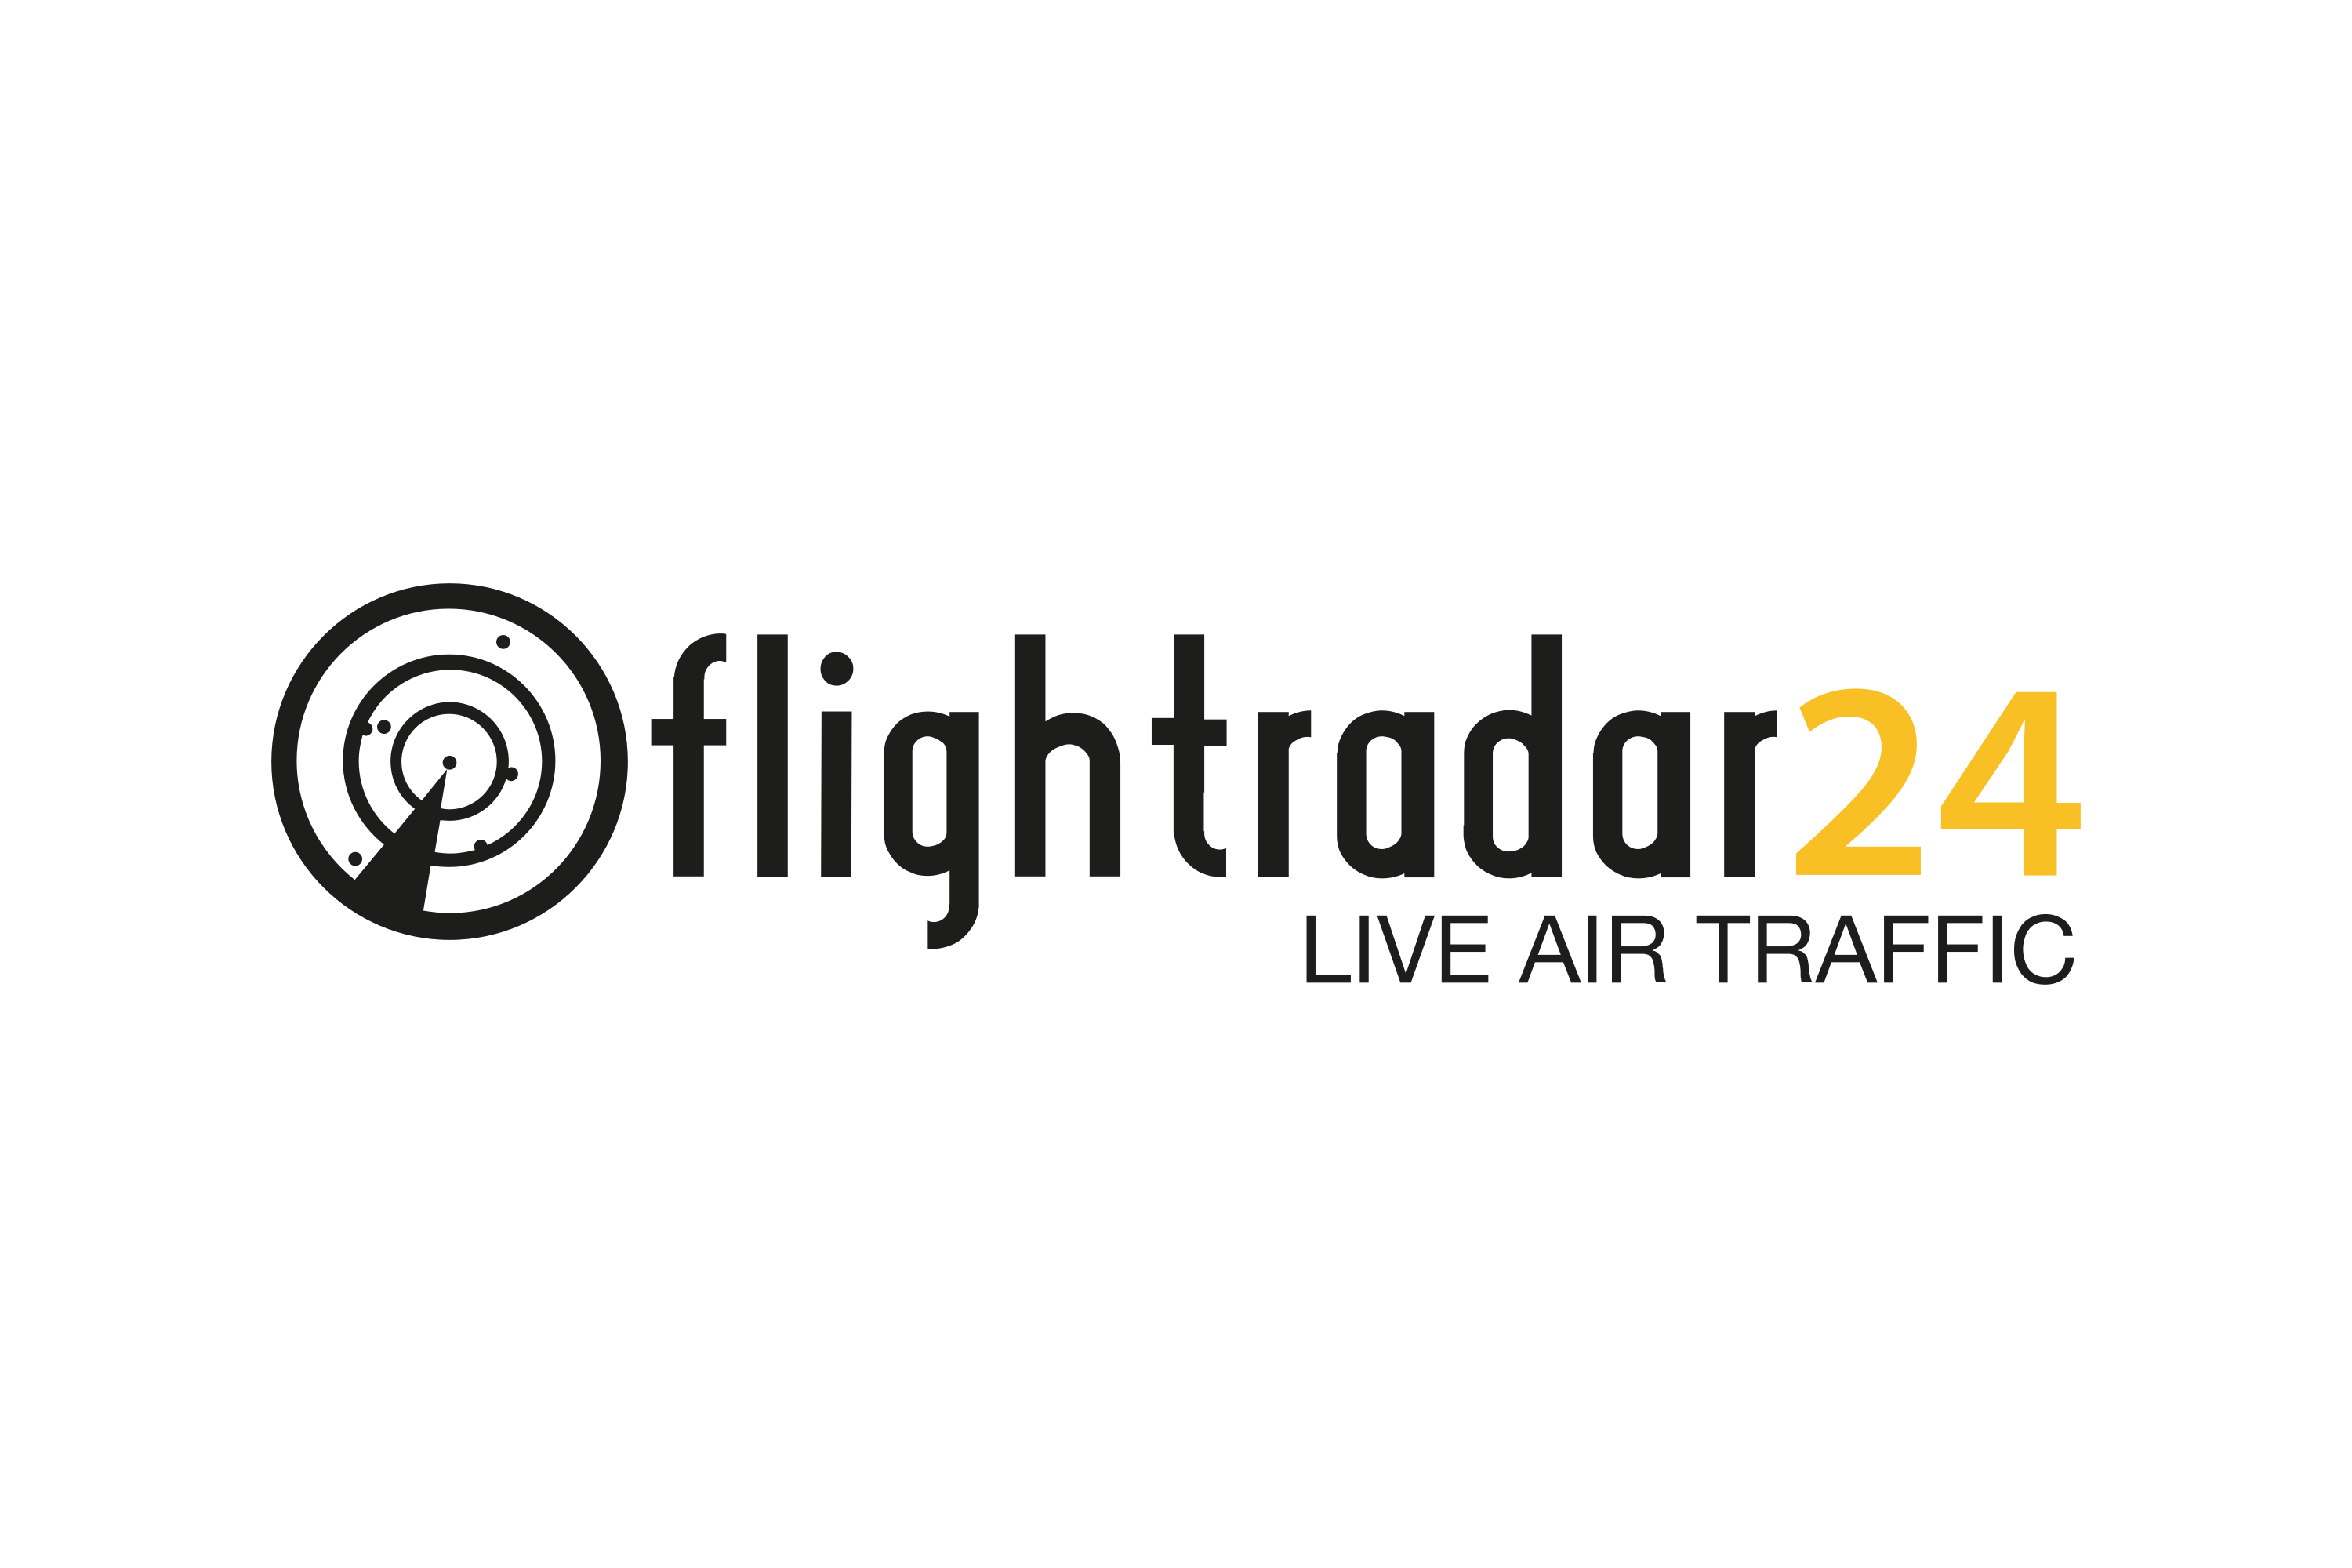 https://download.logo.wine/logo/Flightradar24/Flightradar24-Logo.wine.png